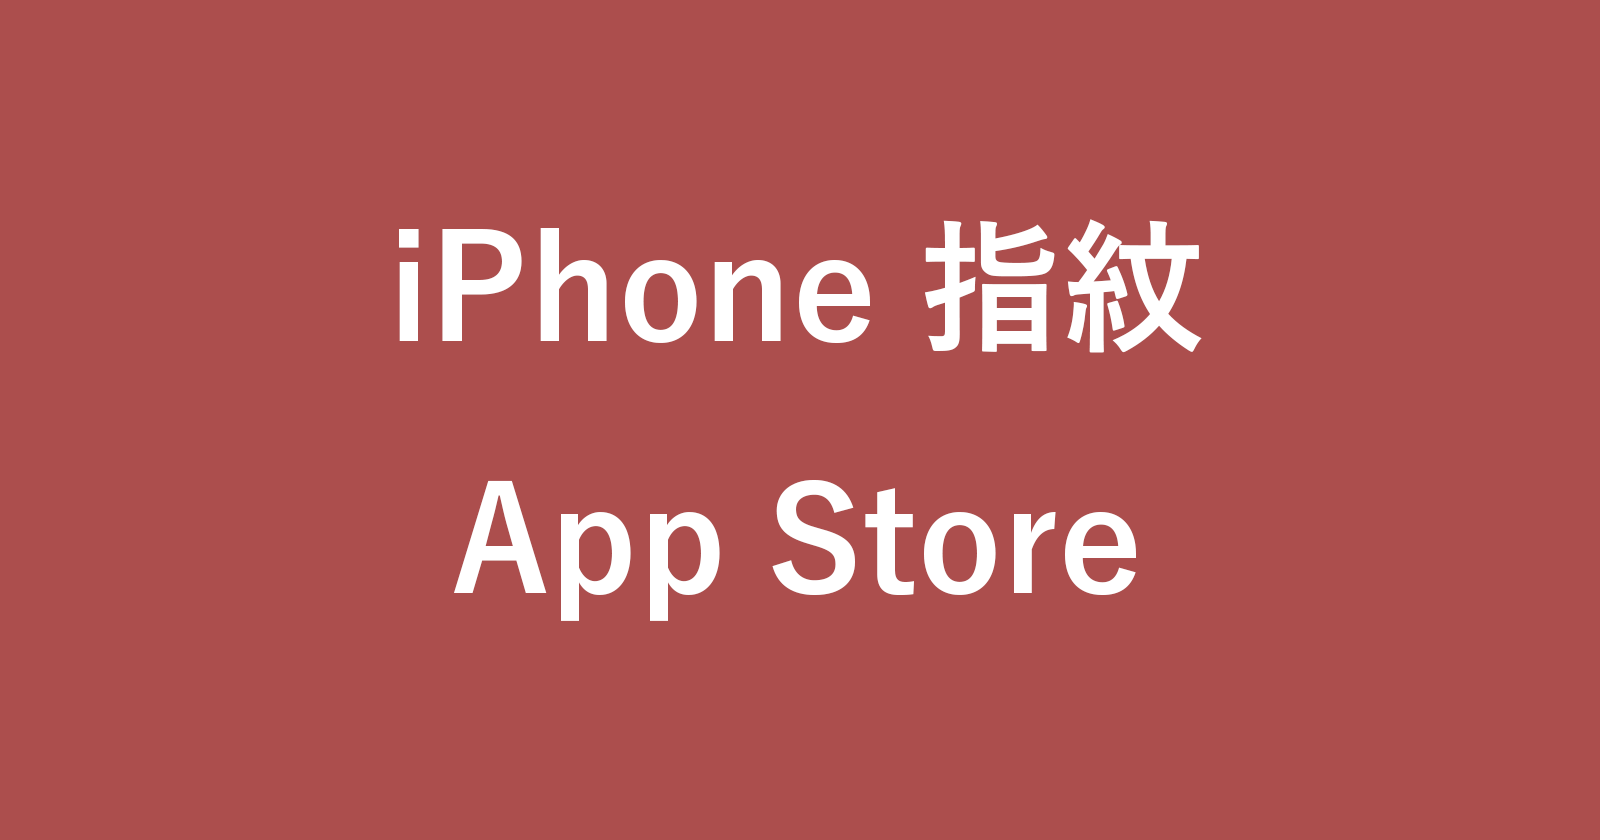 iphone fingerprint app store